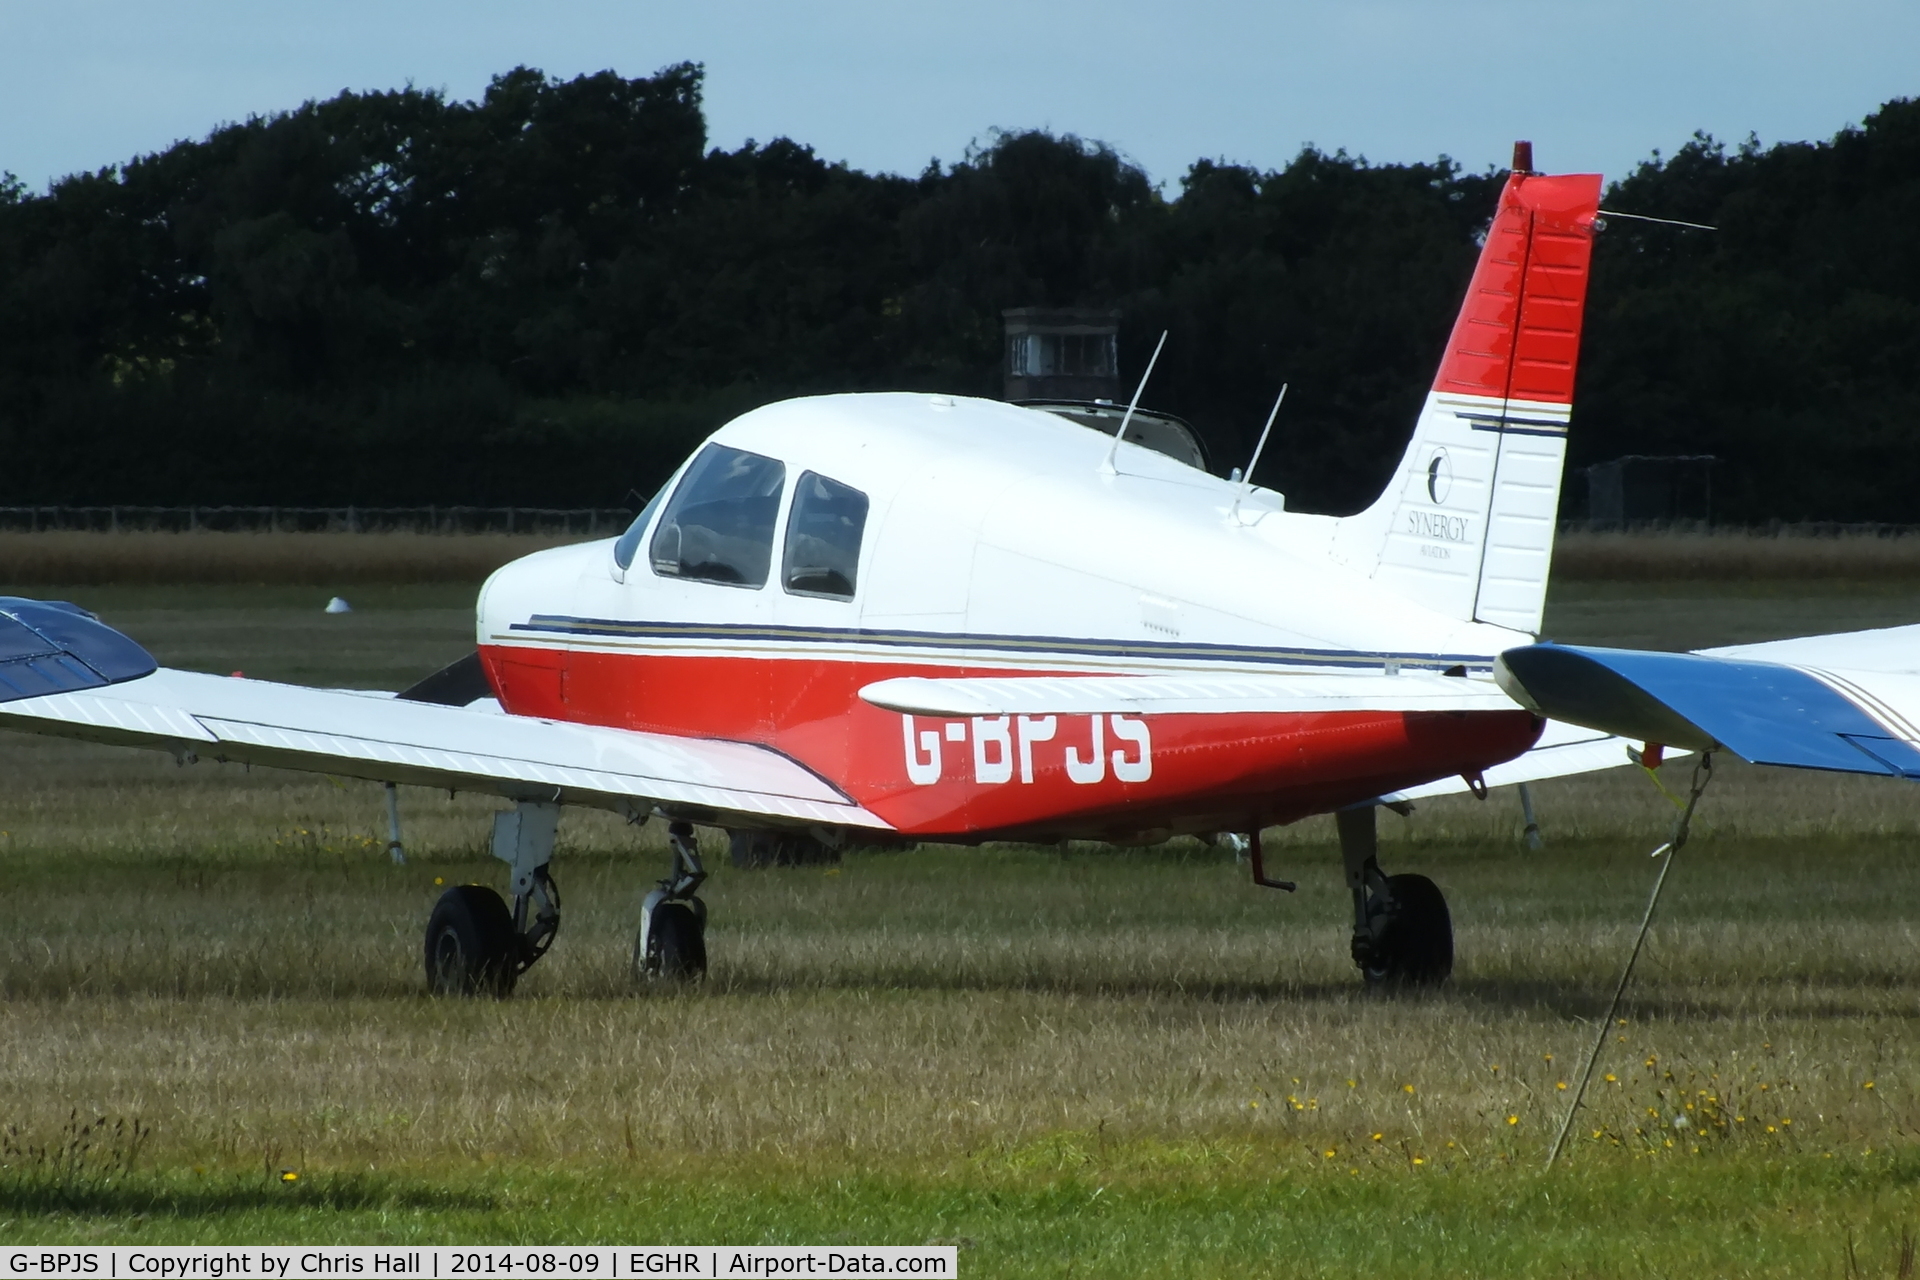 G-BPJS, 1988 Piper PA-28-161 Cadet C/N 2841025, at Goodwood airfield